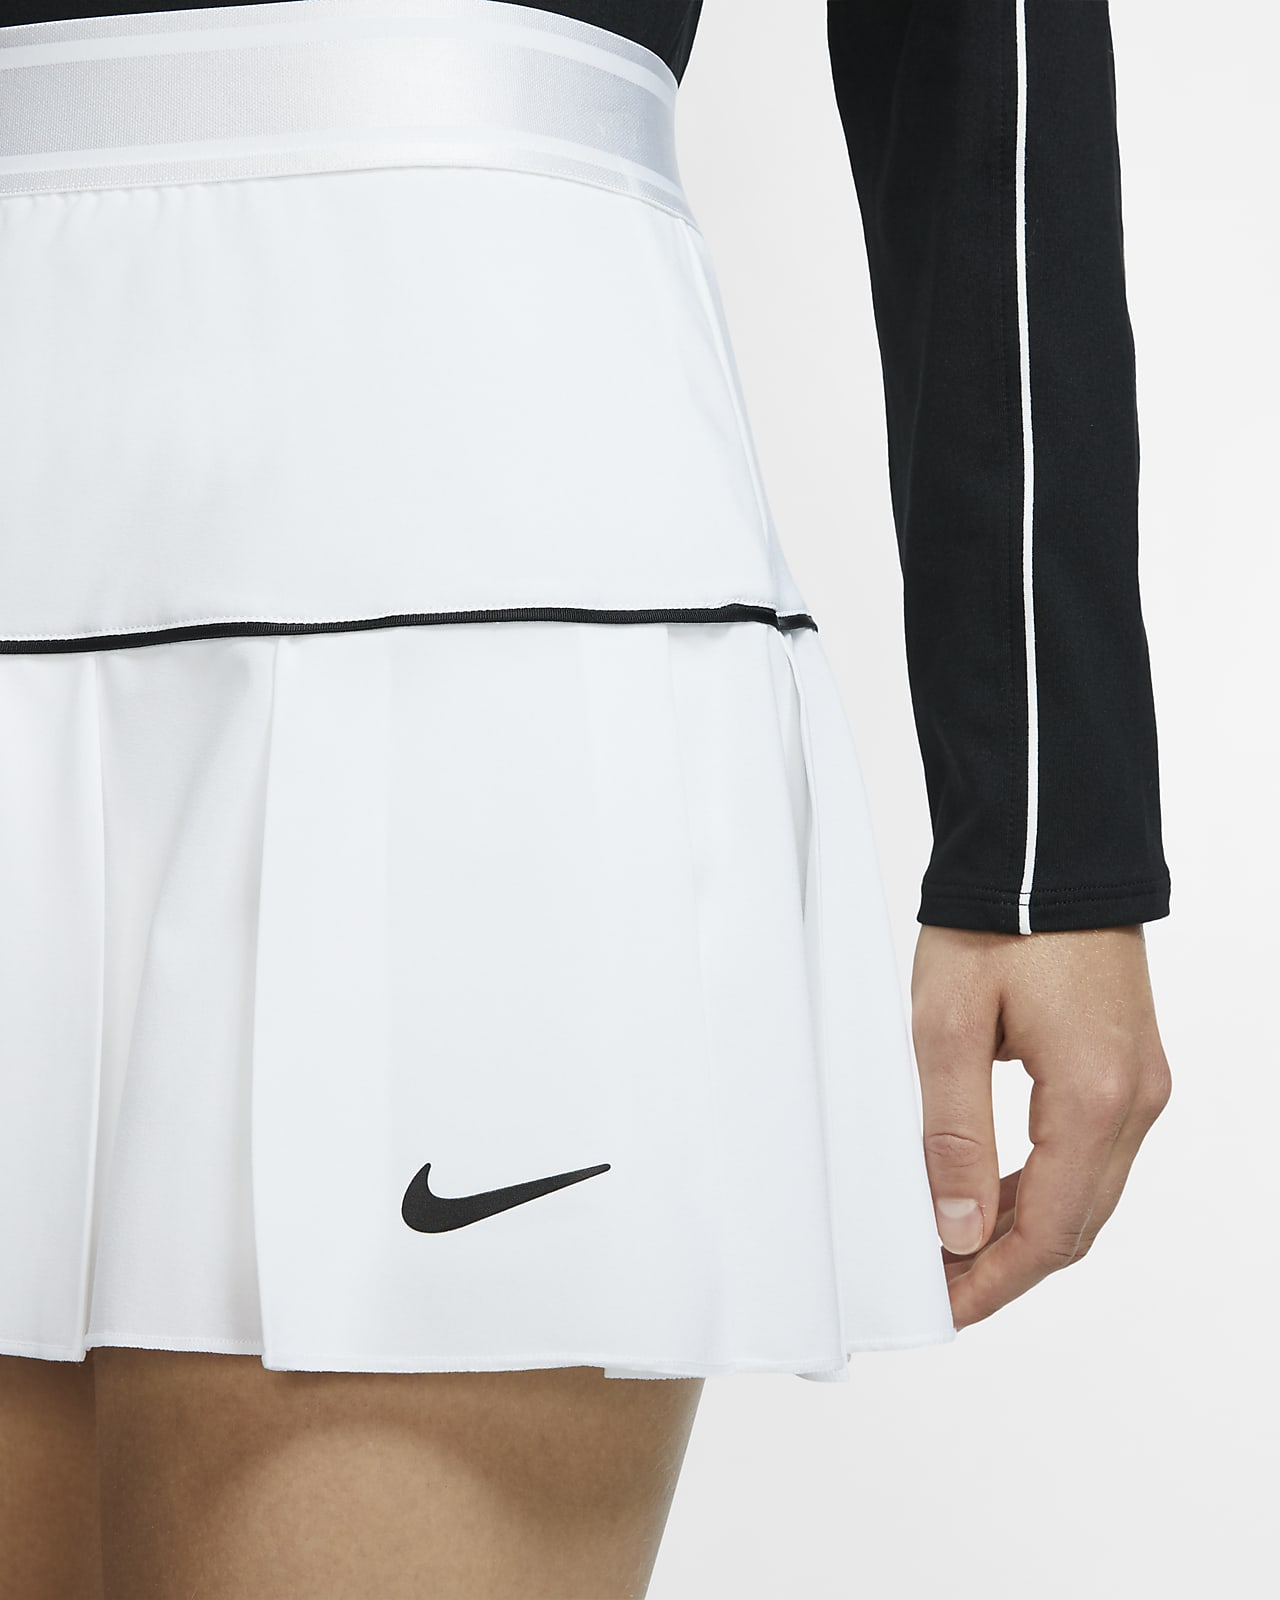 Юбка найк. Юбка женская Nike Court Victory Oxygen. Юбка теннисная Kappa. Теннисная юбка найк. Теннисная юбка Nike.